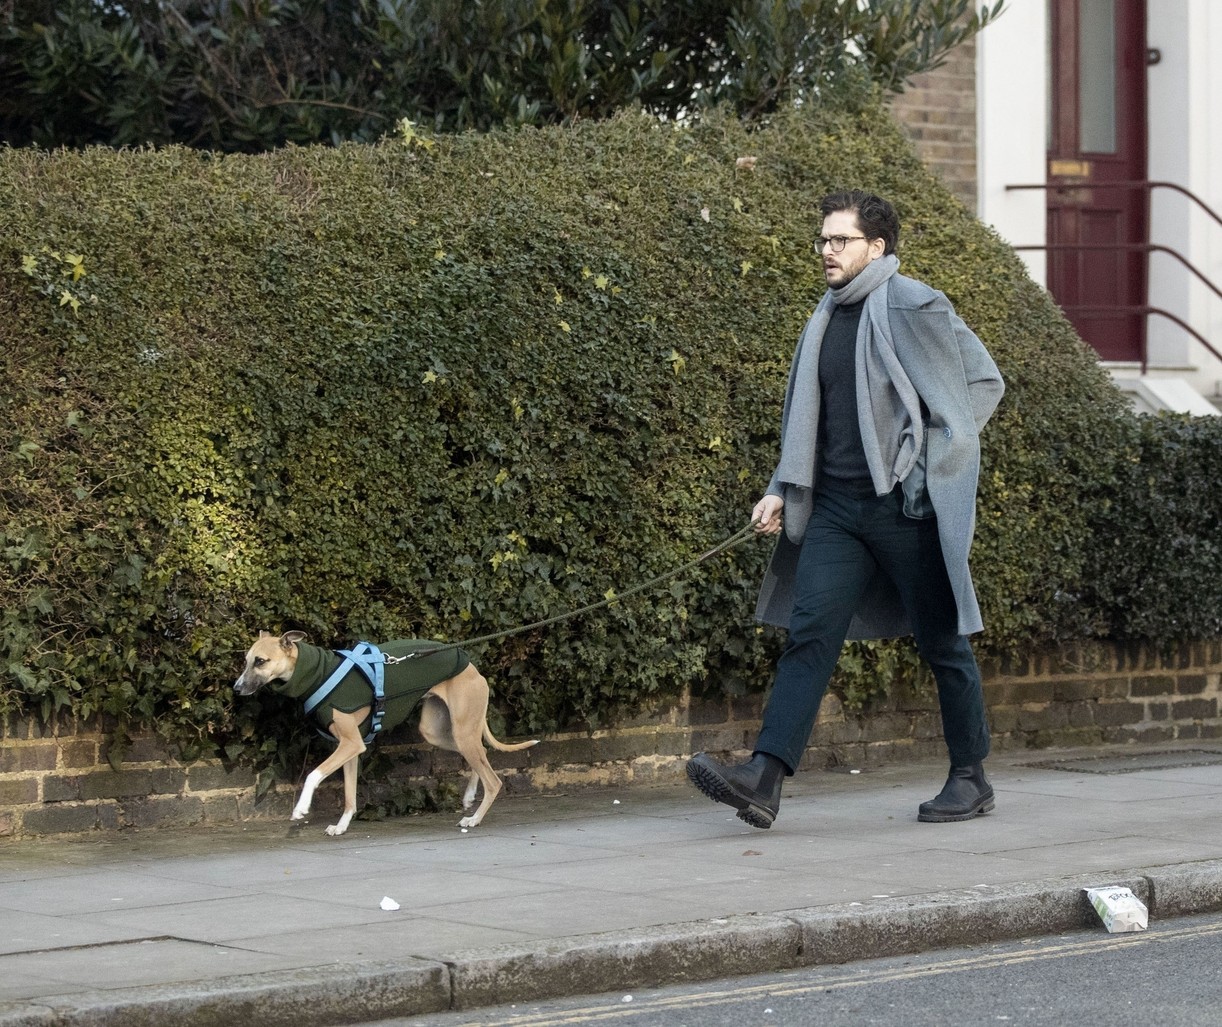 kit harington dog walk after welcoming newborn baby 154527570